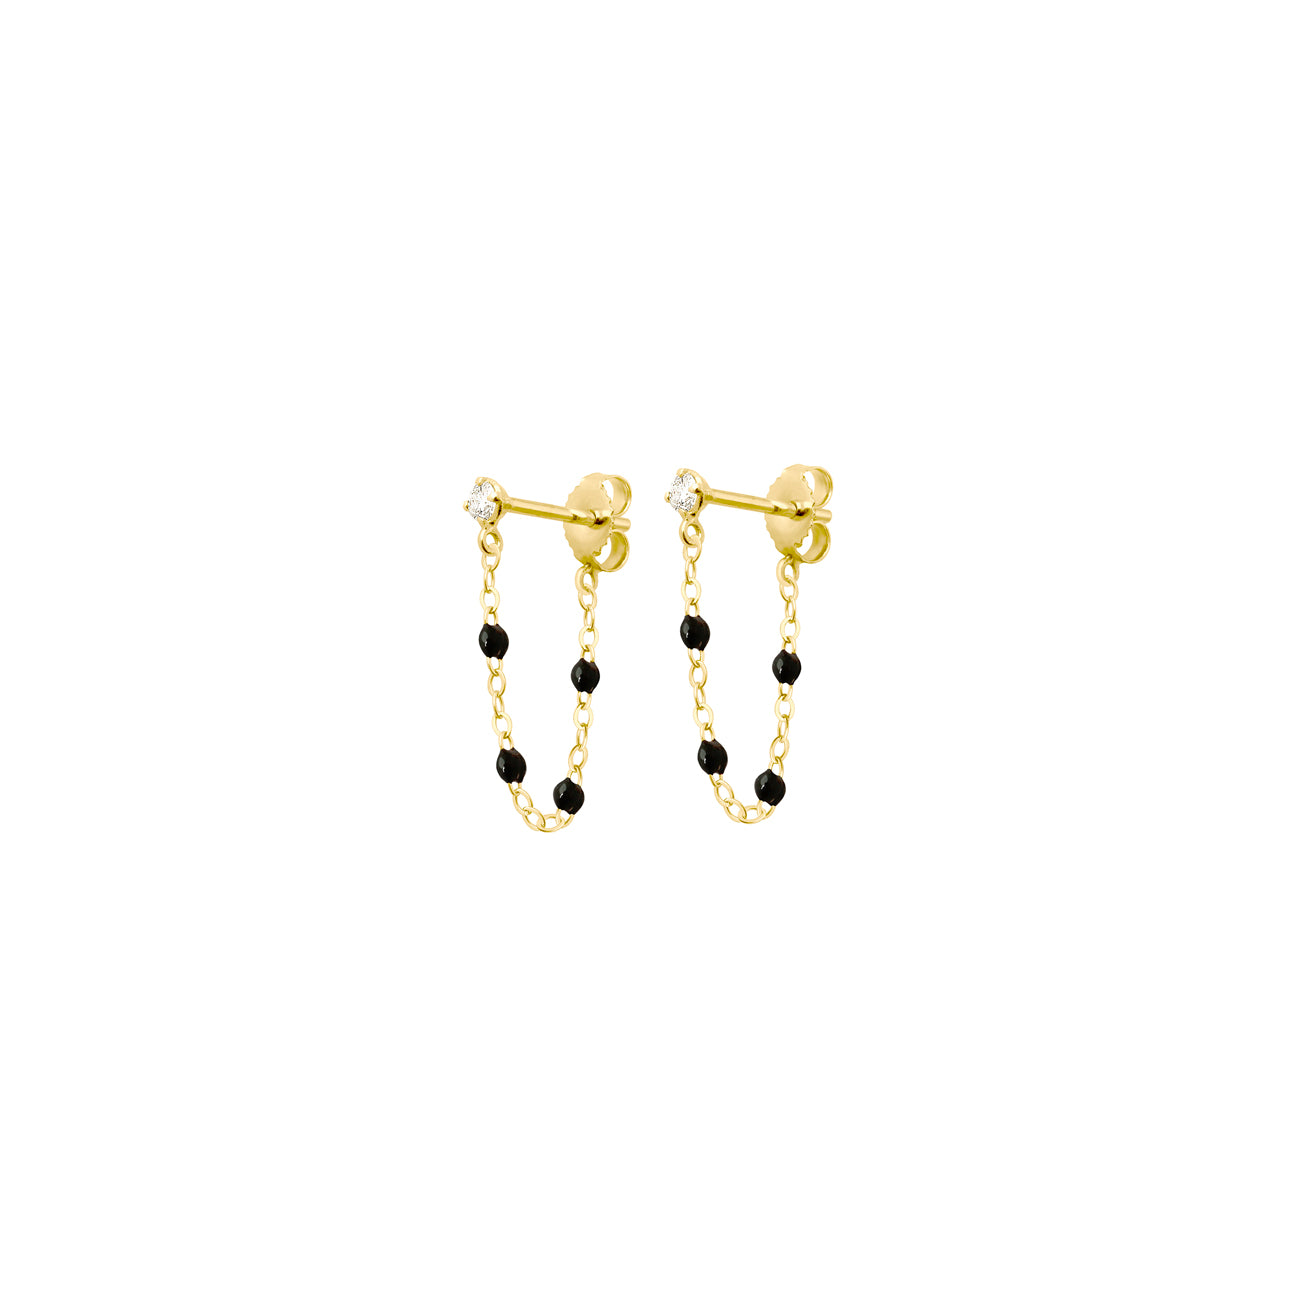 Unique Diamond Hoop Earrings Large Black Diamond Huggies 14K Yellow Gold  3ct 000727